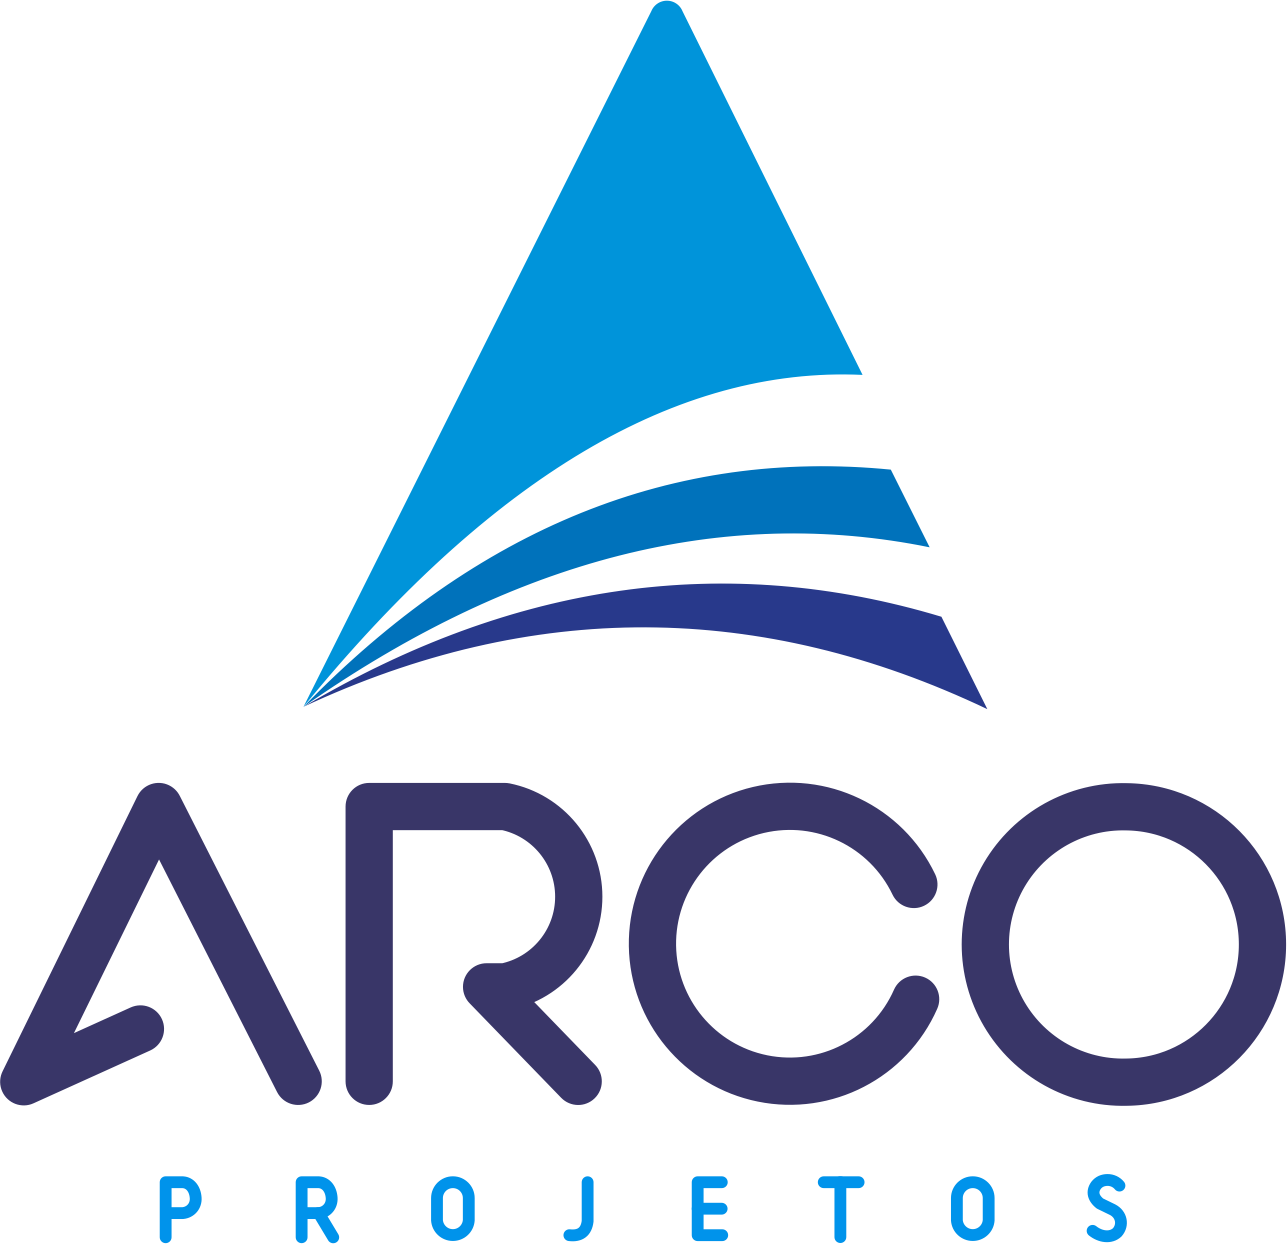 ARCO PROJETOS - Engenharia - Consultoria - Salvador, BA